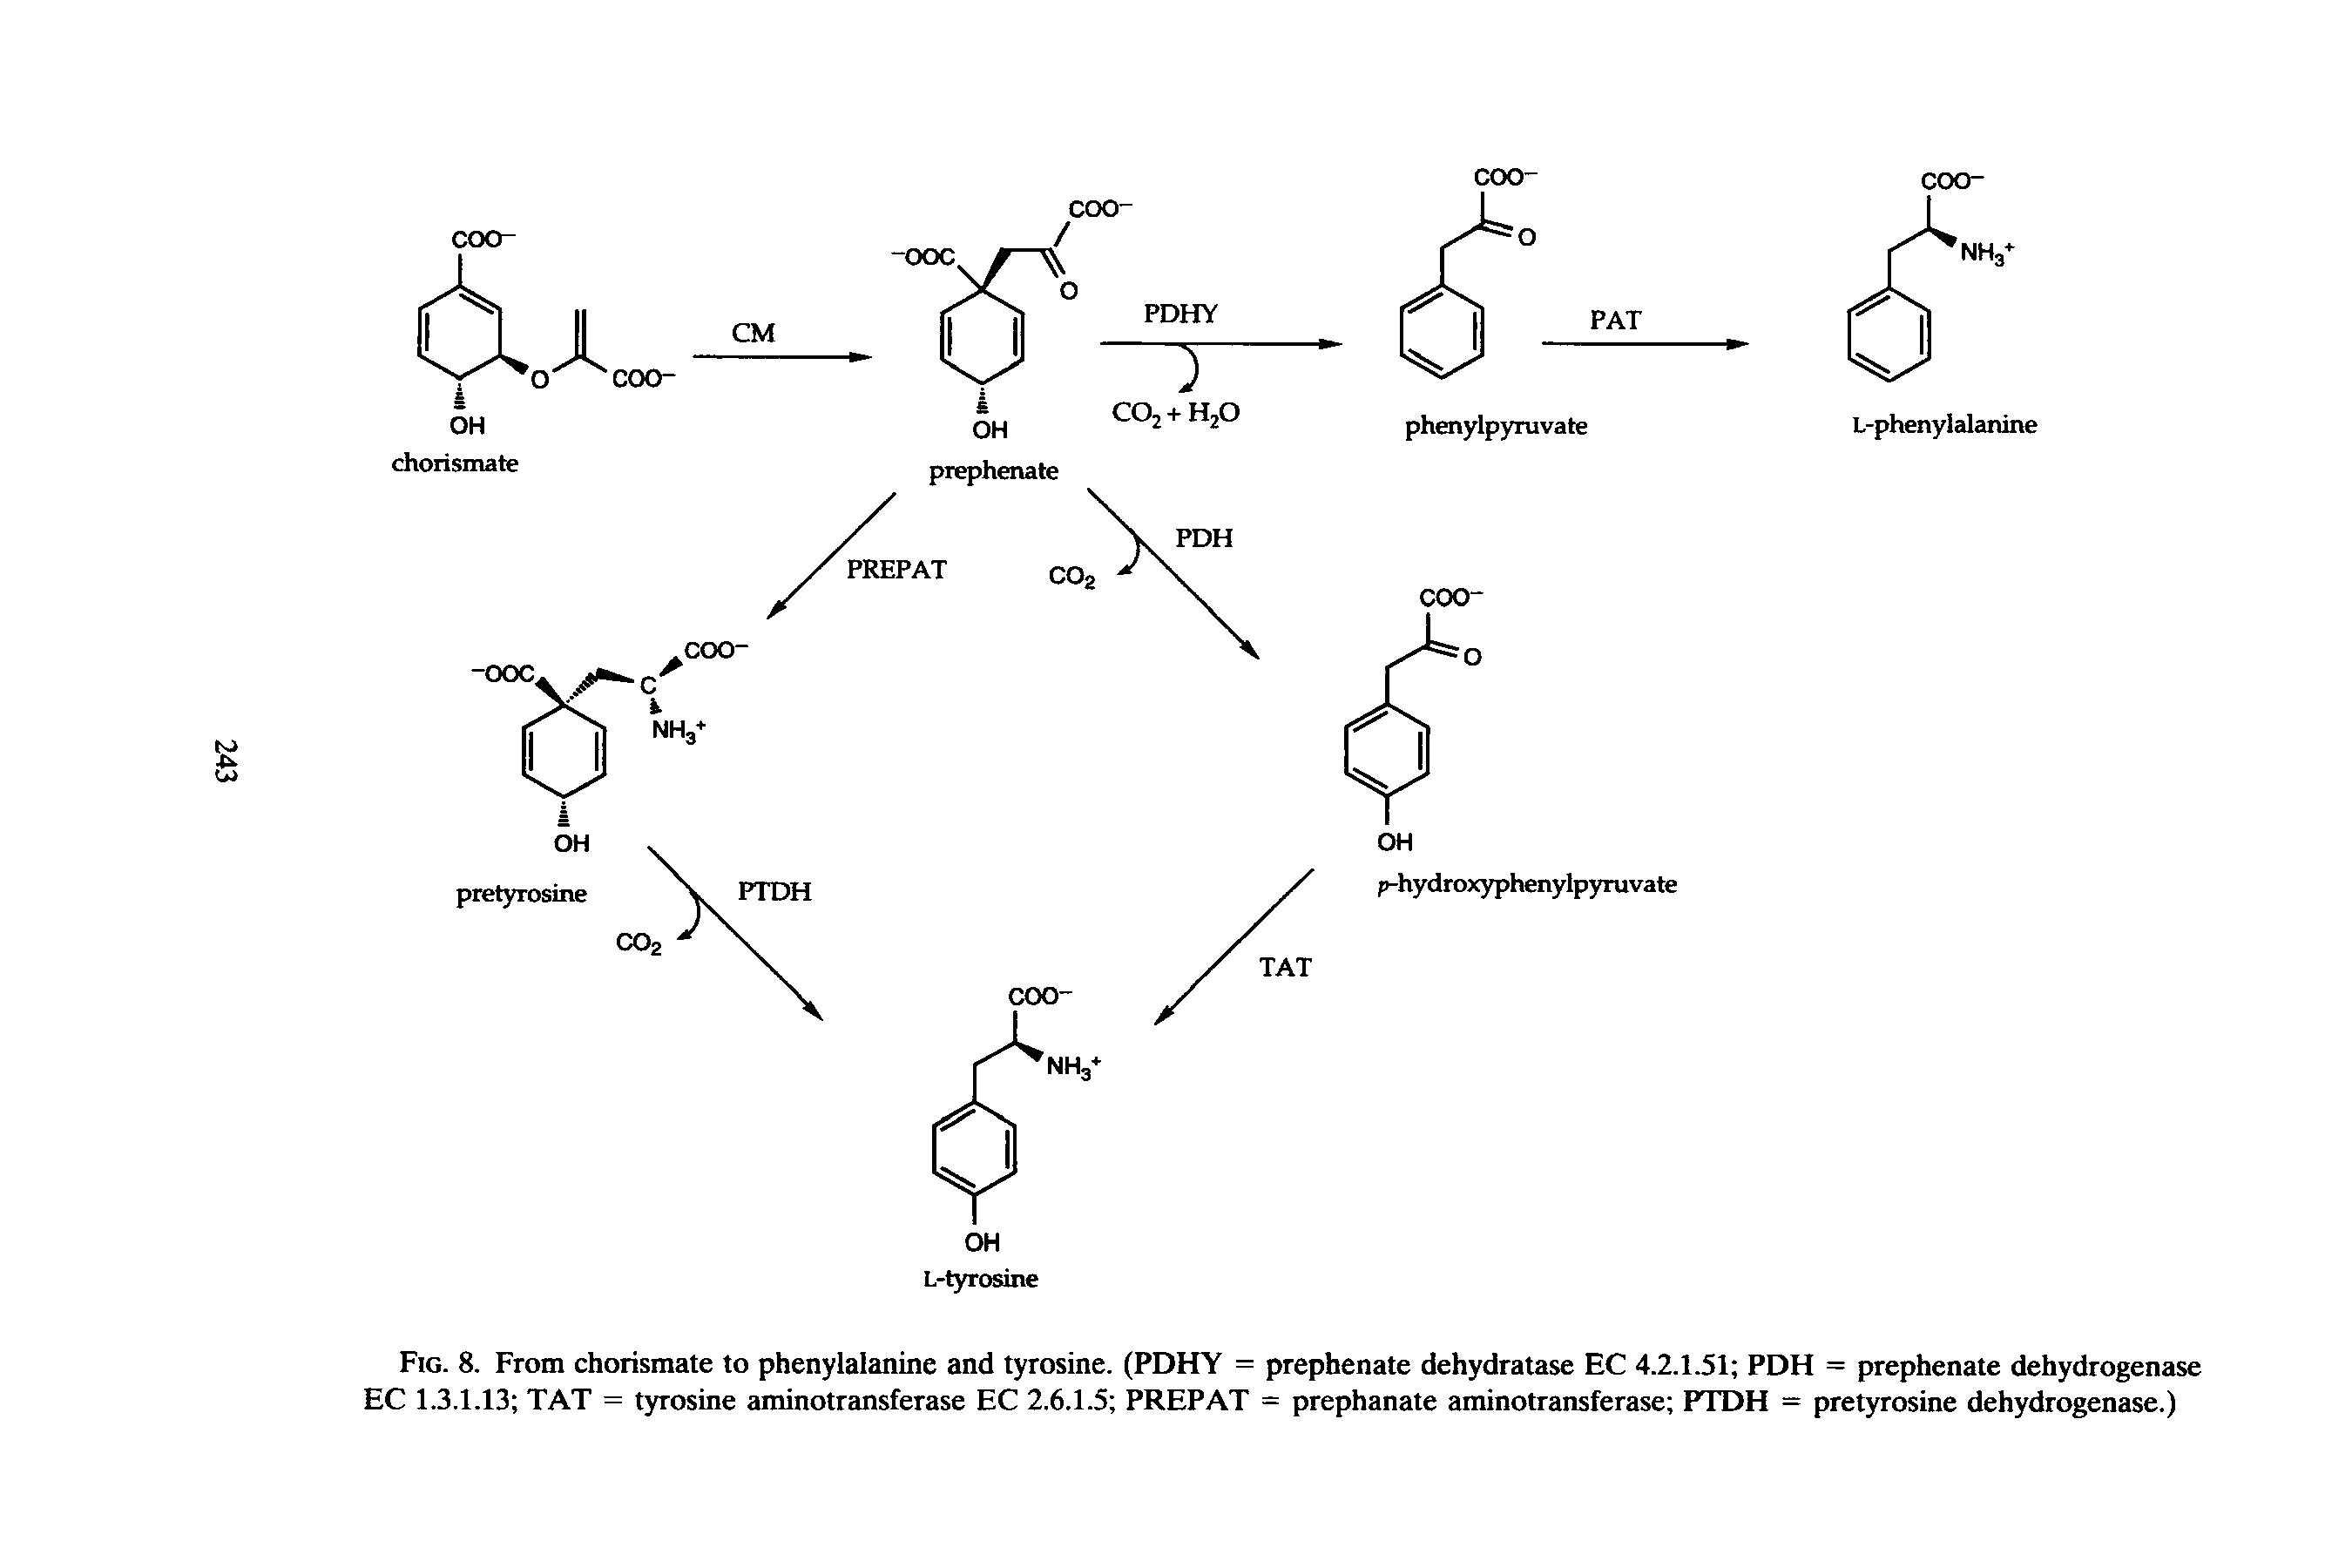 Fig. 8. From chorismate to phenylalanine and tyrosine. (PDHY = prephenate dehydratase EC 4.2.1.51 PDH = prephenate dehydrogenase EC 1.3.1.13 TAT = tyrosine aminotransferase EC 2.6.1.5 PREPAT = prephanate aminotransferase PTDH = pretyrosine dehydrogenase.)...